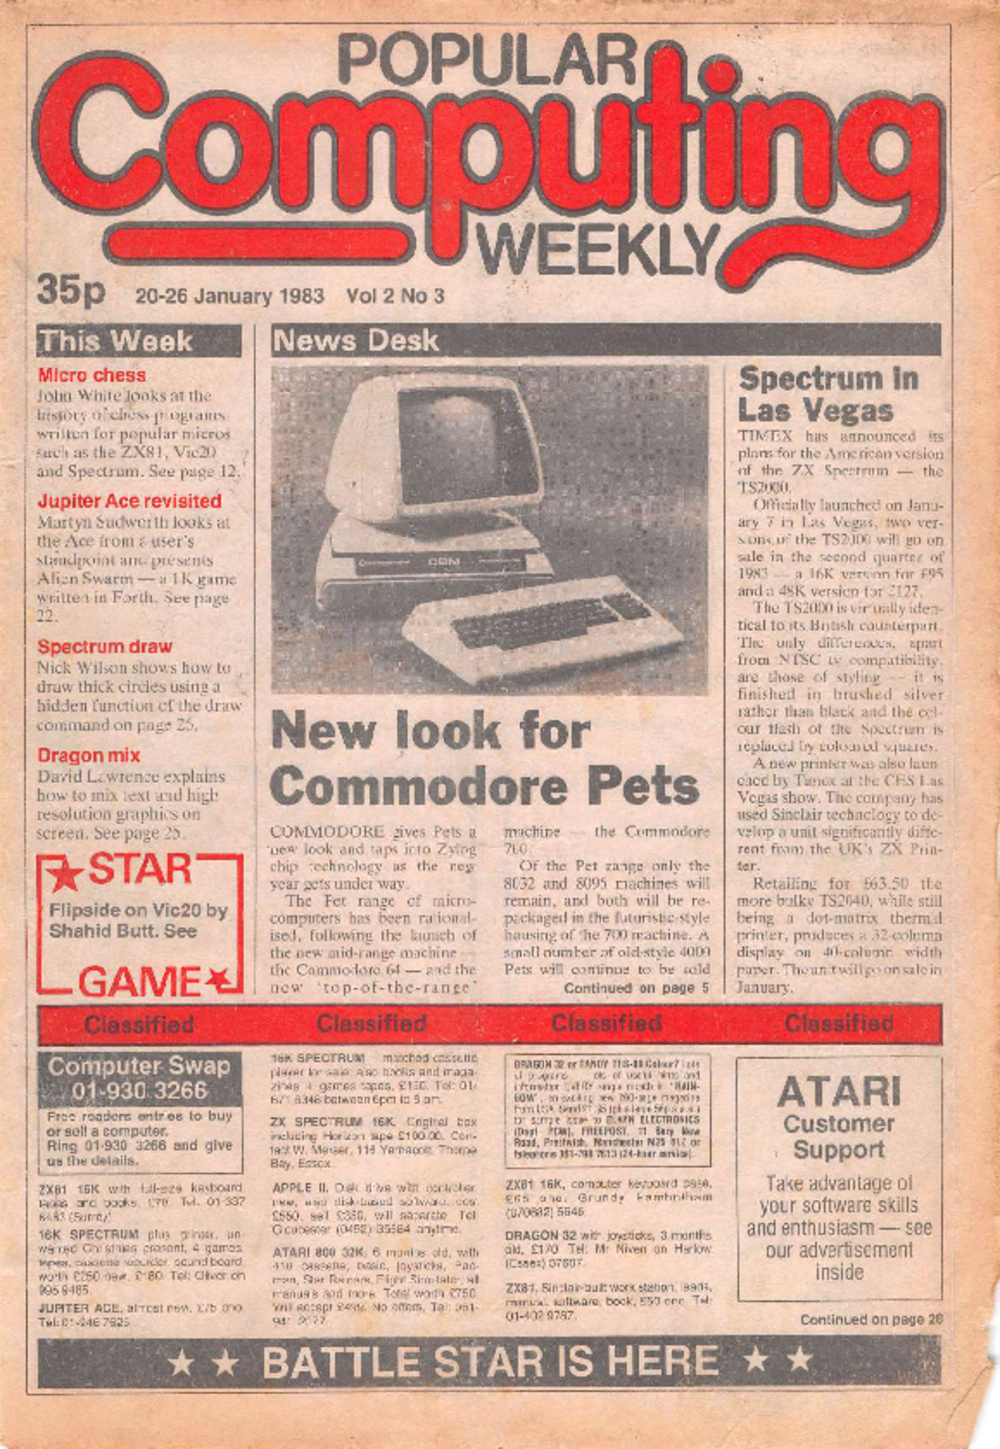 Article: Popular Computing Weekly Vol 2 No 03 - 20-26 January 1983